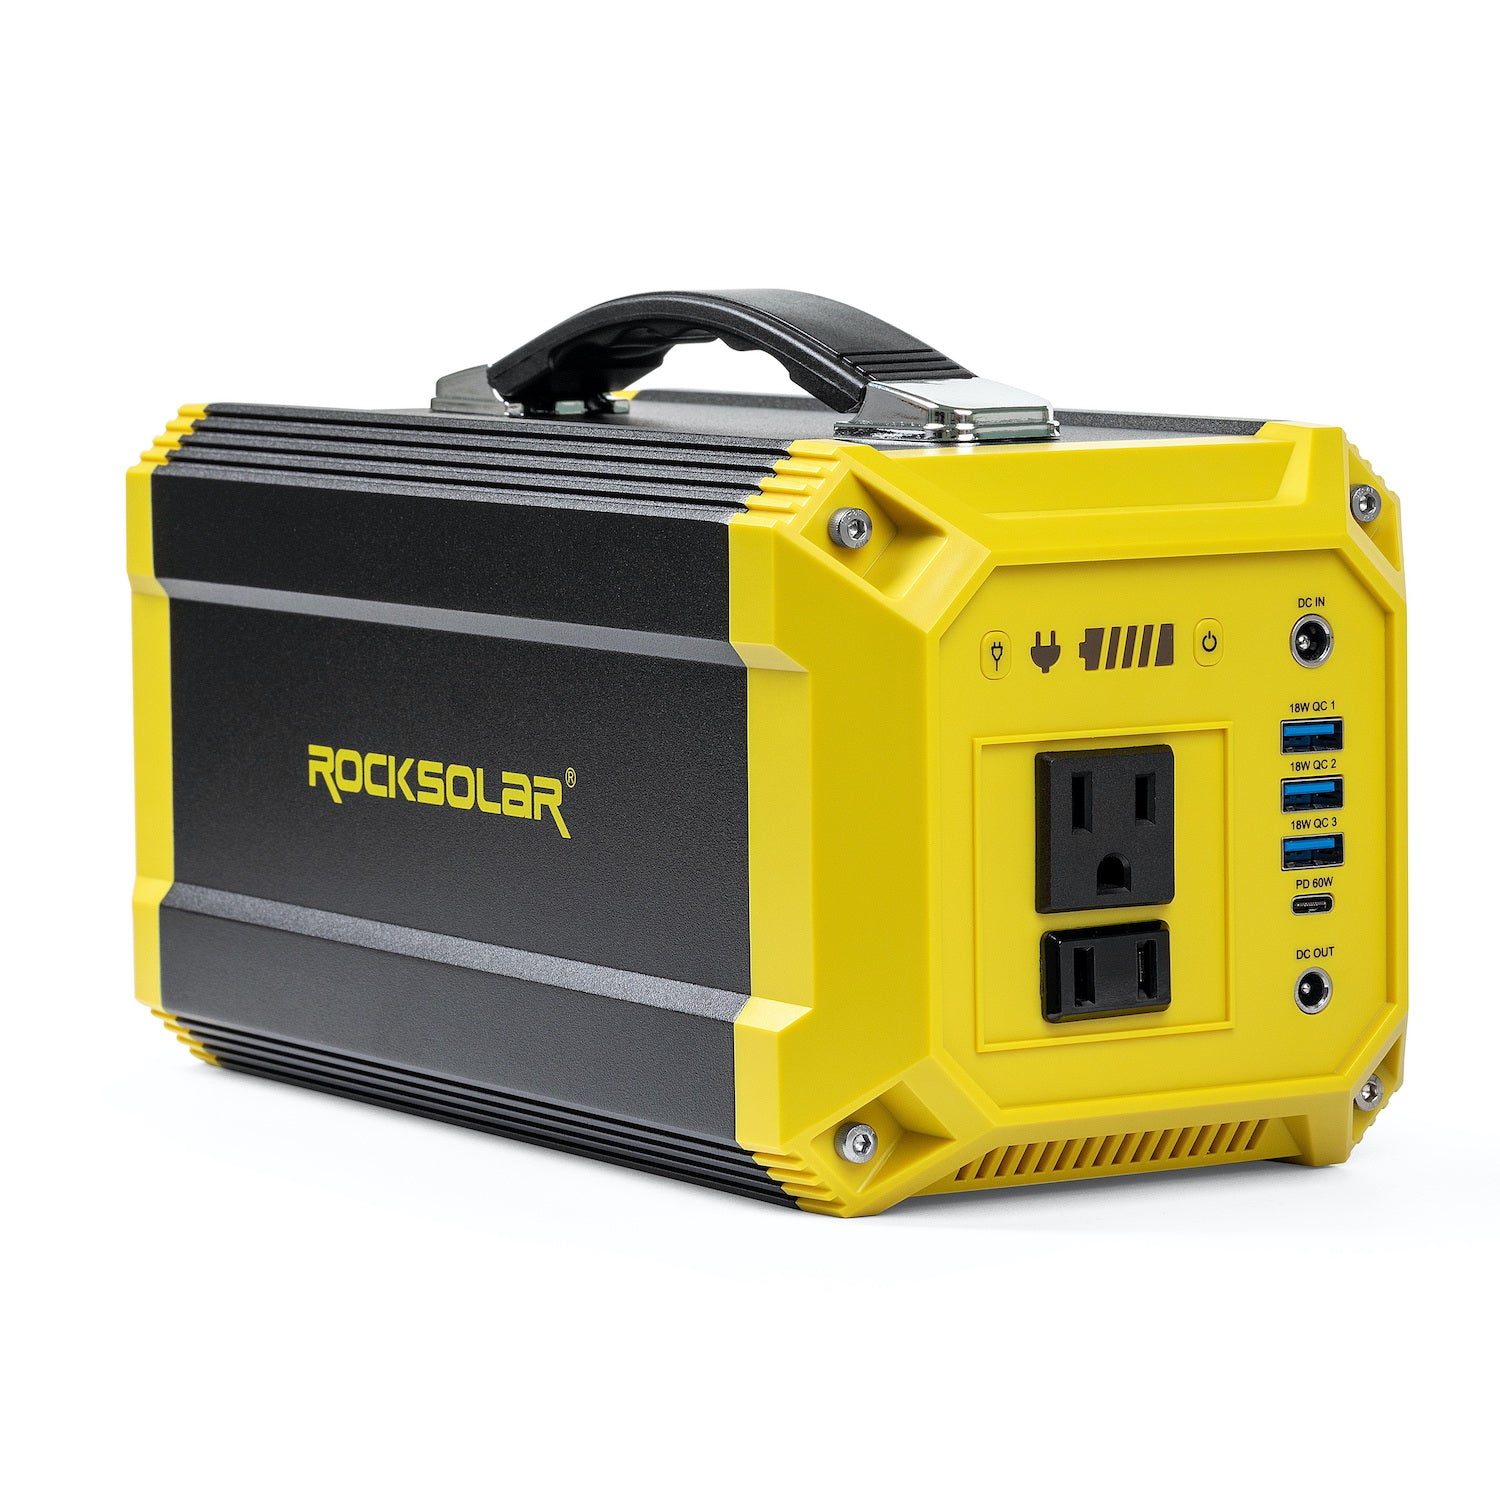 ROCKSOLAR Utility 300W Portable Power Station - Lithium Battery and Solar Generator